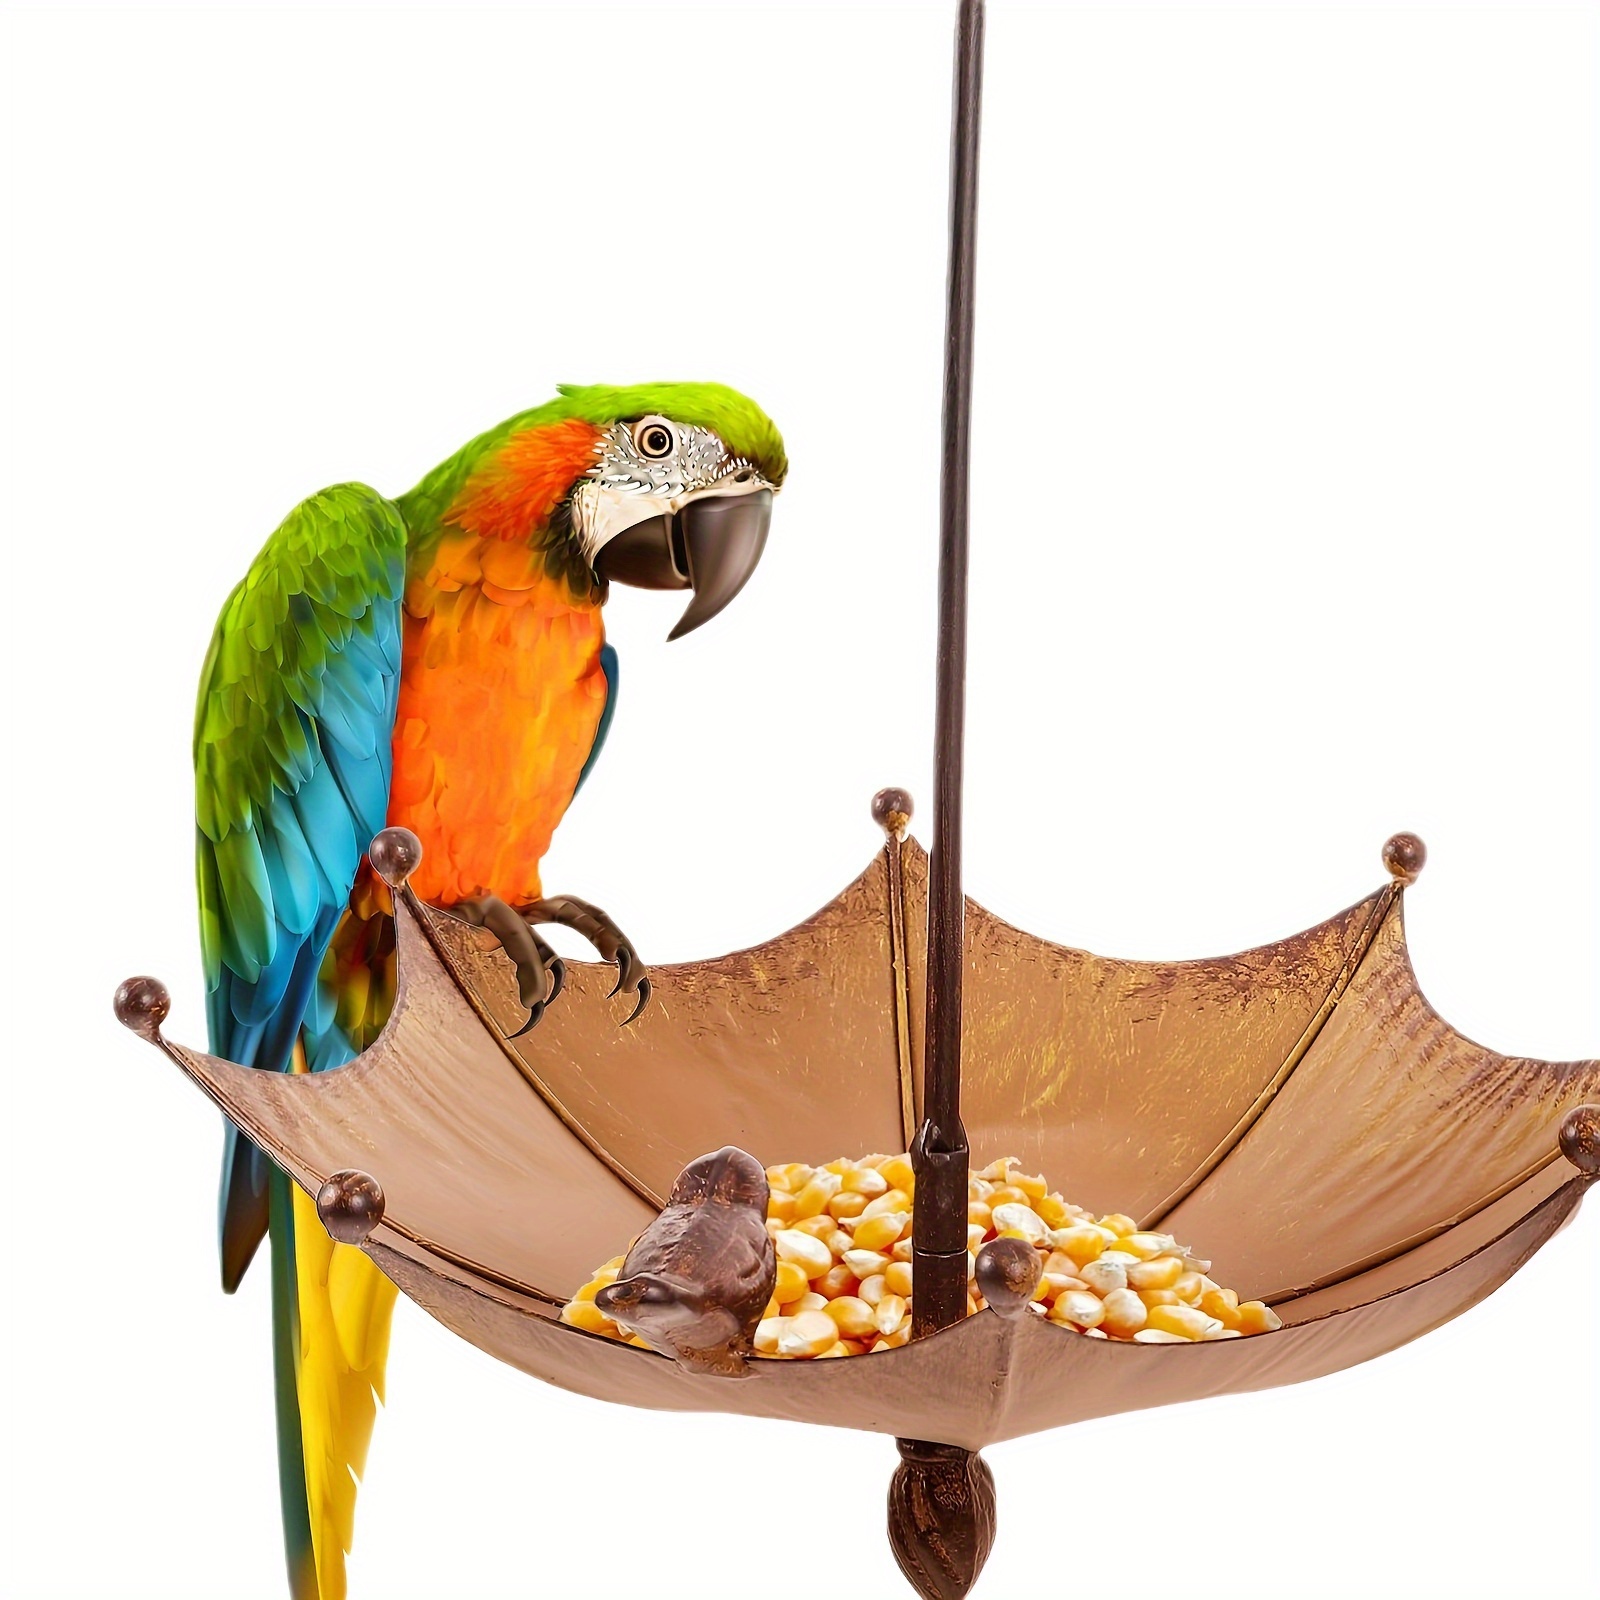 

1pc Umbrella-shaped Bird Feeder, Decorative Iron Art Garden Hanging Bird Seed Tray For Outdoors, Sturdy Metal Feeding Station For Wild Birds